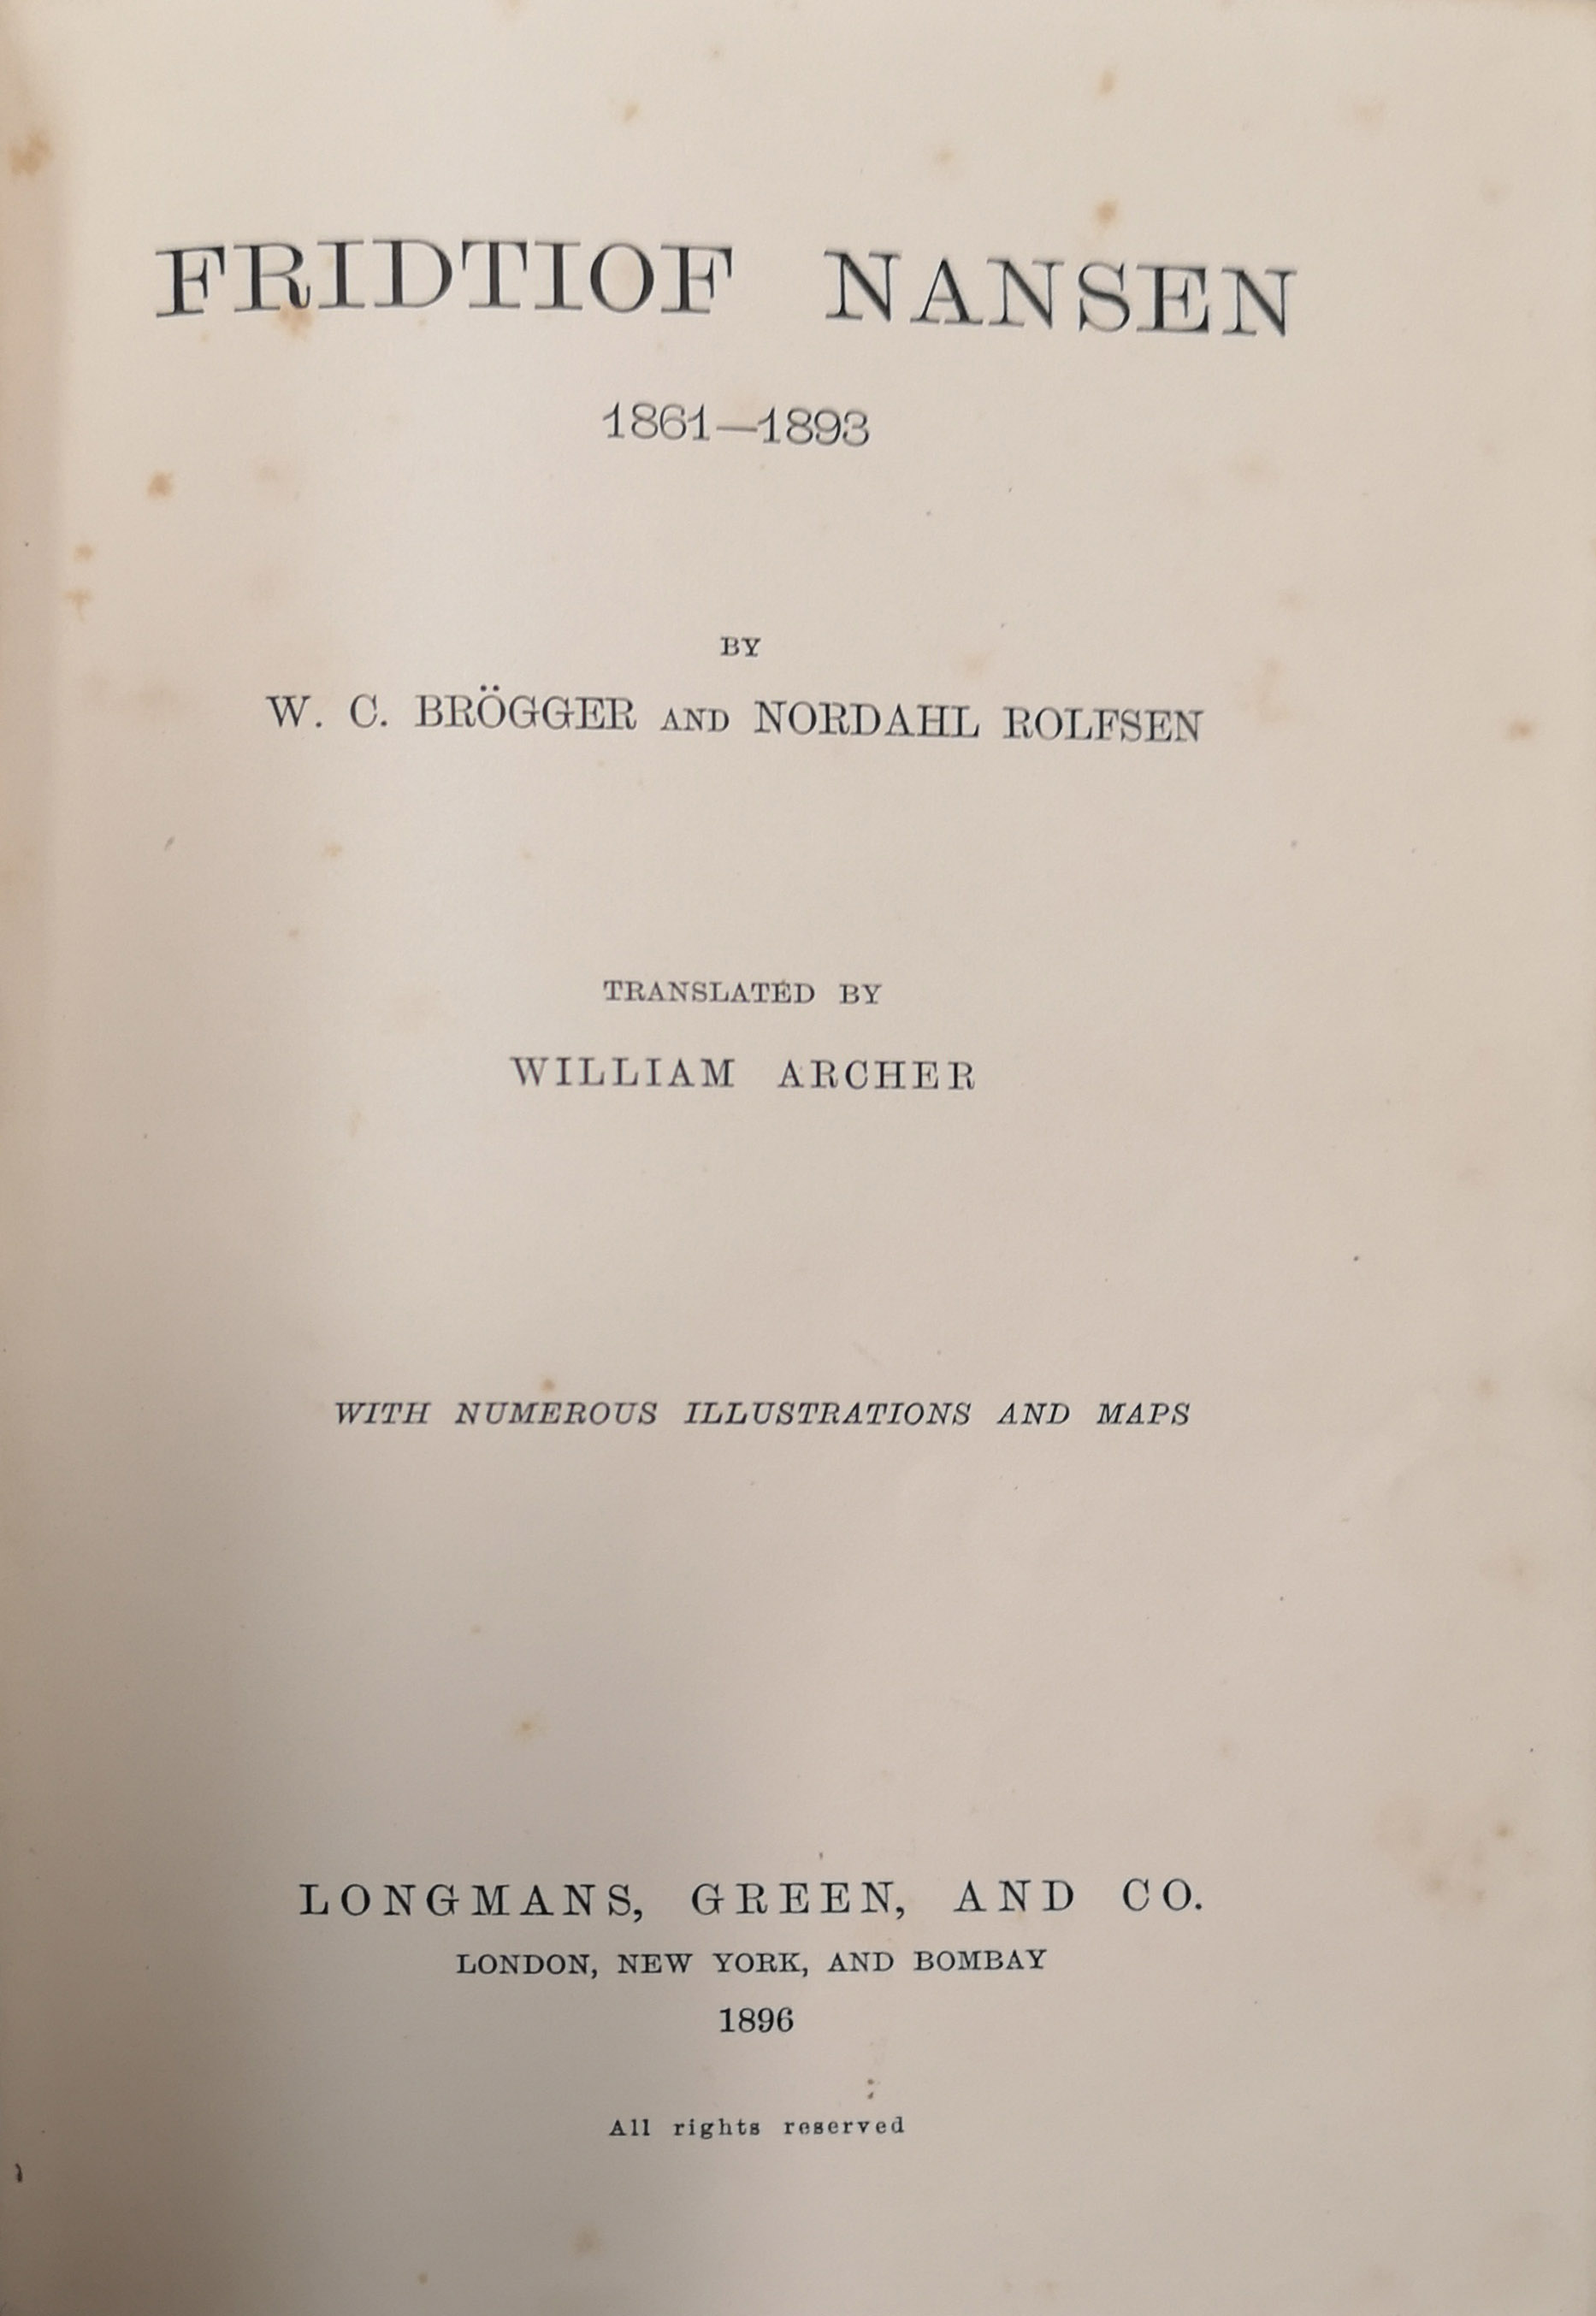 ARTHUR J. BAIN, 'LIFE AND EXPLORATIONS OF FRIDTJOF NANSEN' London, Walter Scott, 8 vol., new - Image 2 of 3